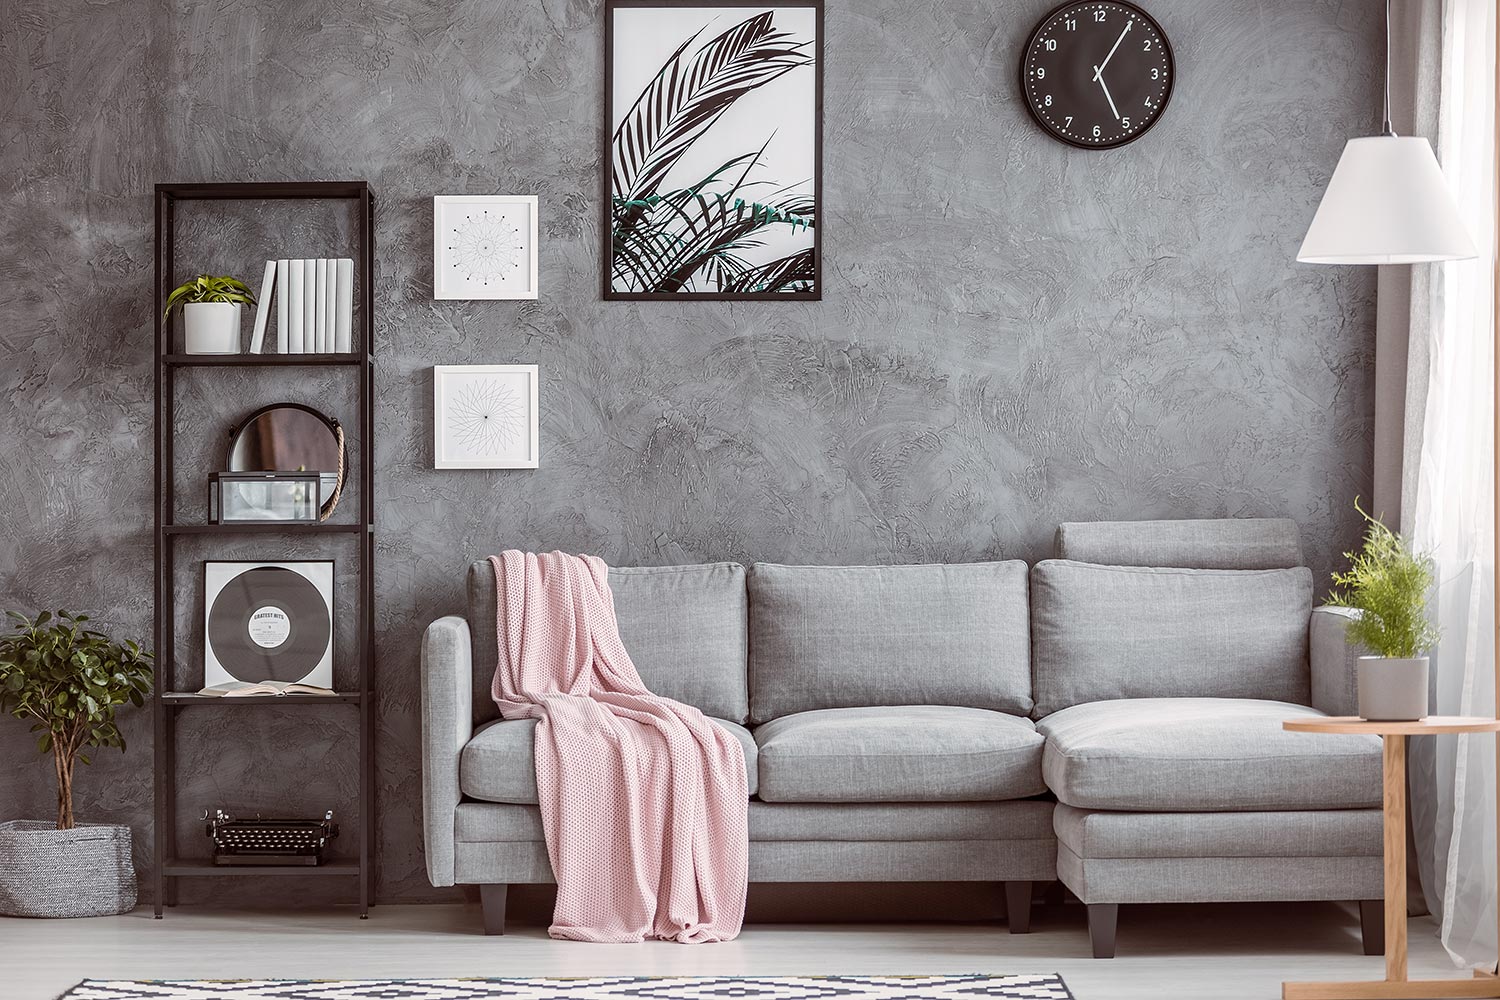 Stylish living room with comfortable grey corner sofa